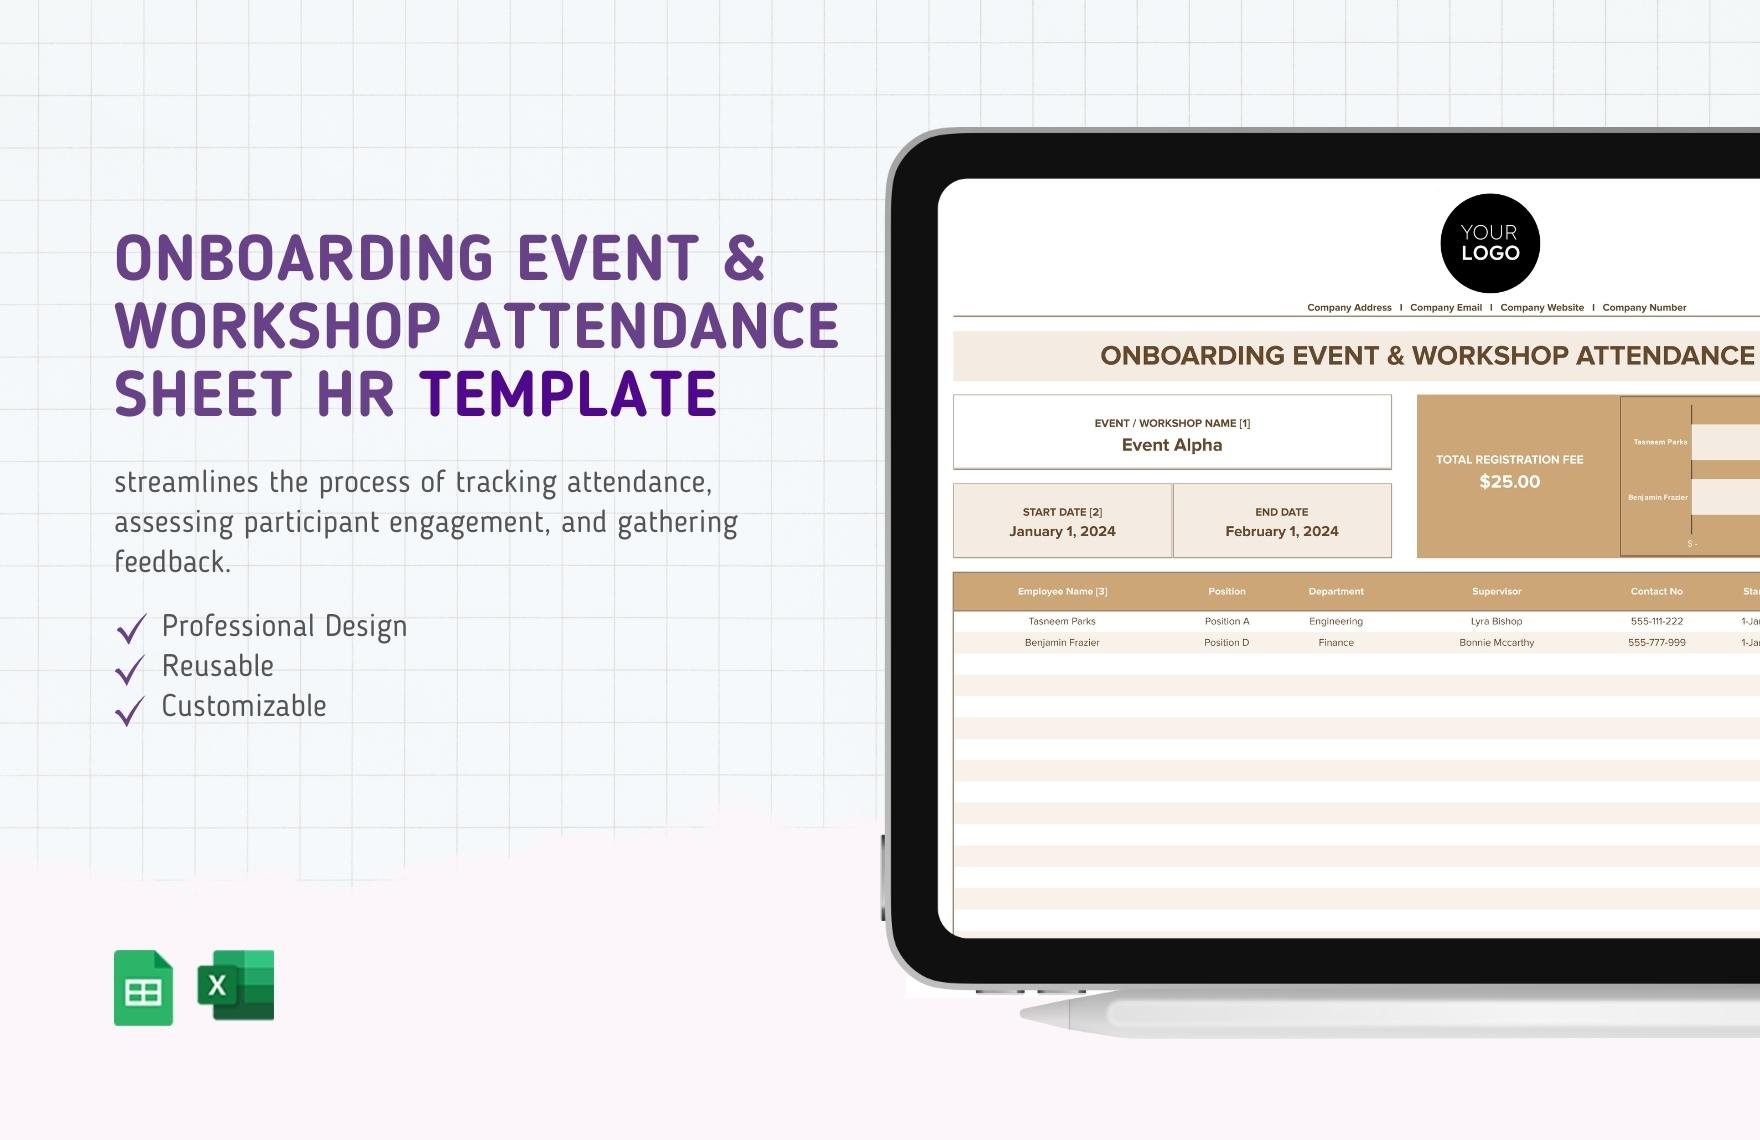 Onboarding Event & Workshop Attendance Sheet HR Template in Excel, Google Sheets